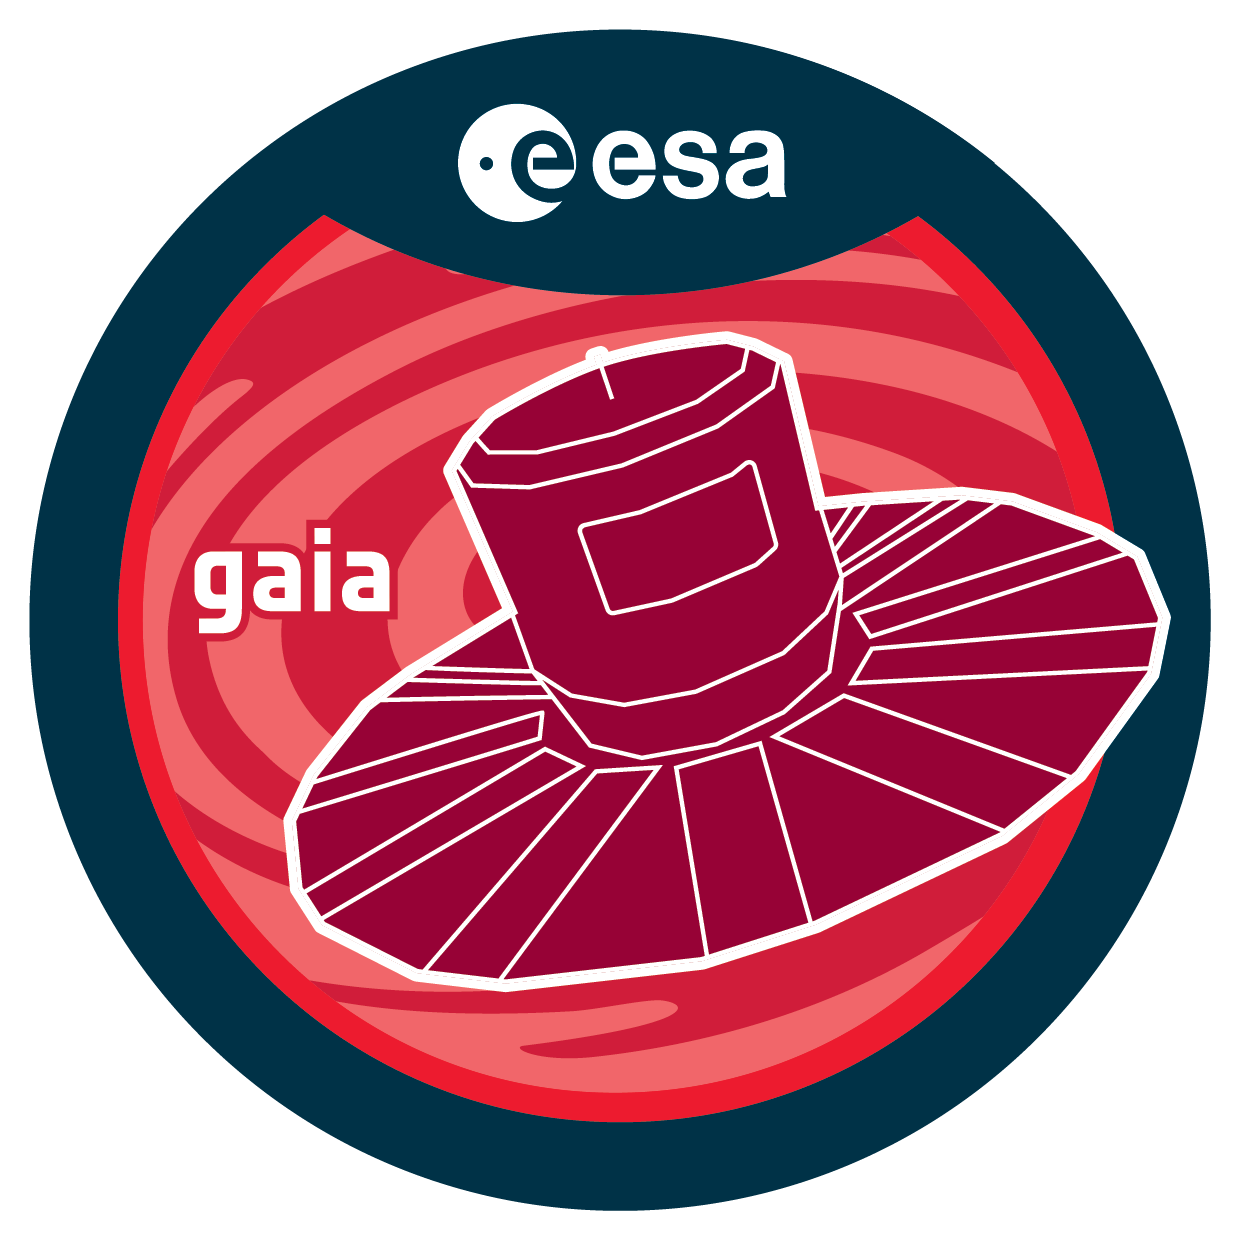 LISA Pathfinder Mission Logo